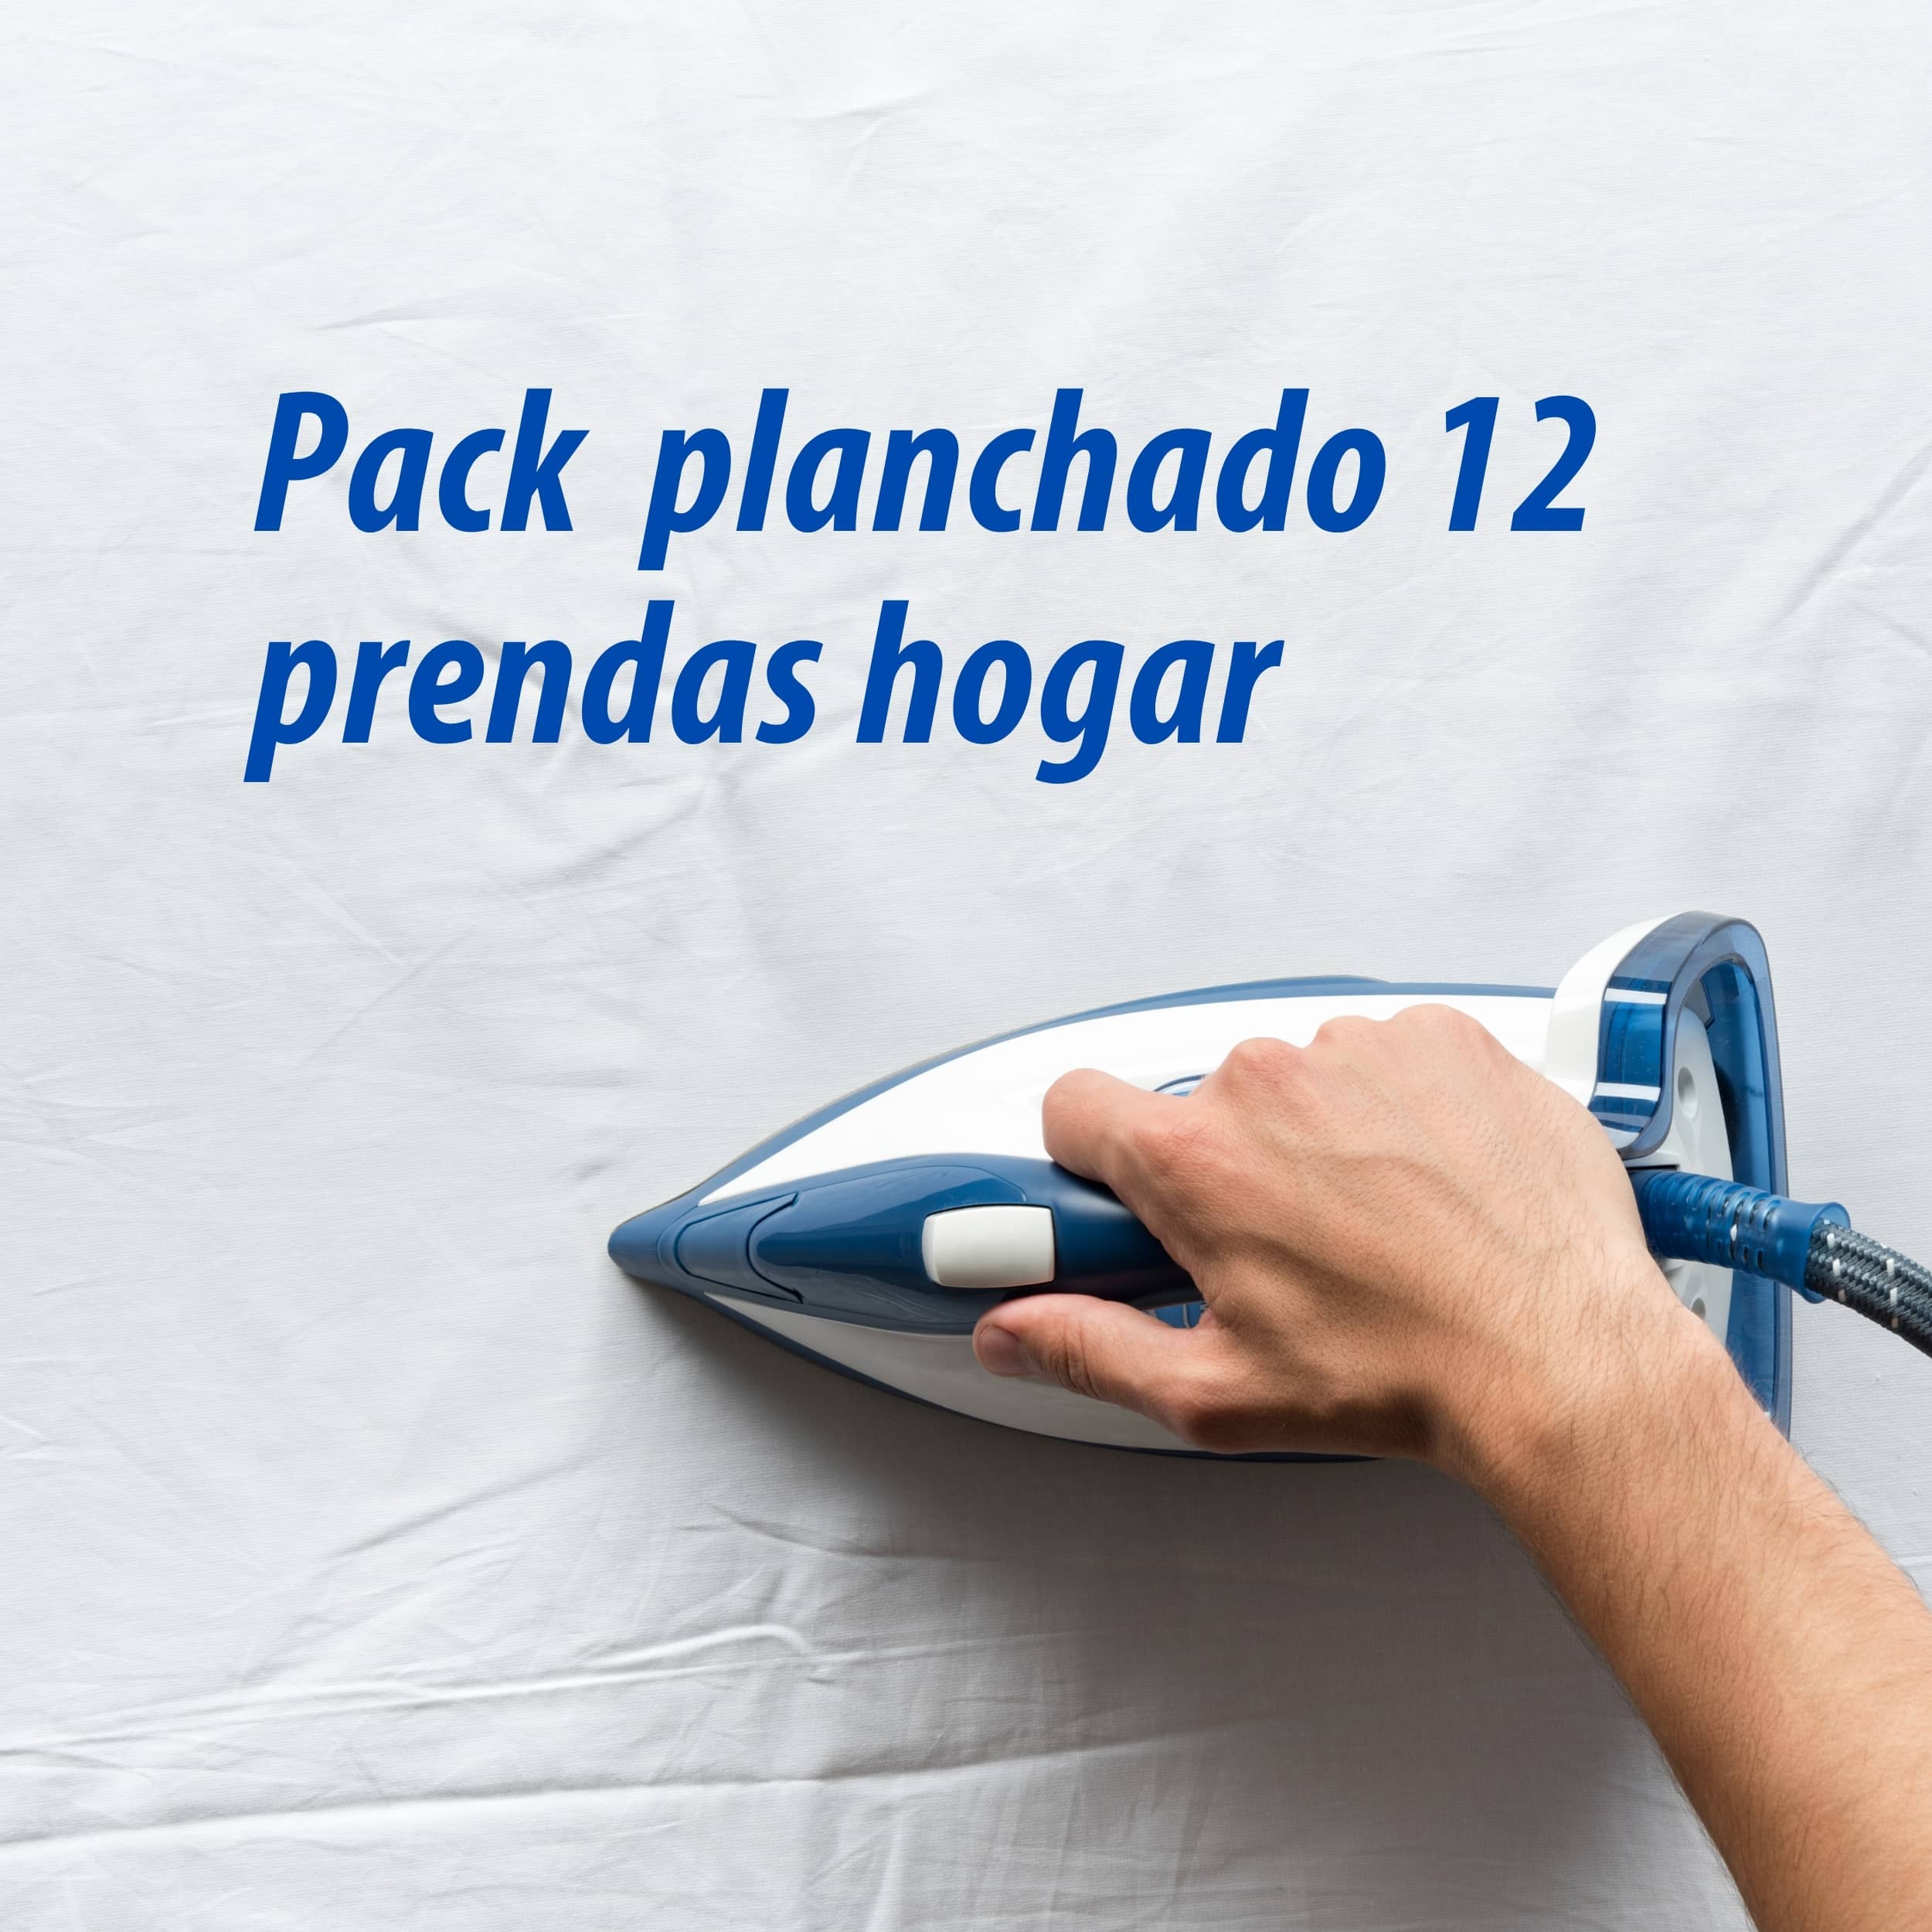 Pack planchado 12 prendas ropa hogar - Prontomatic